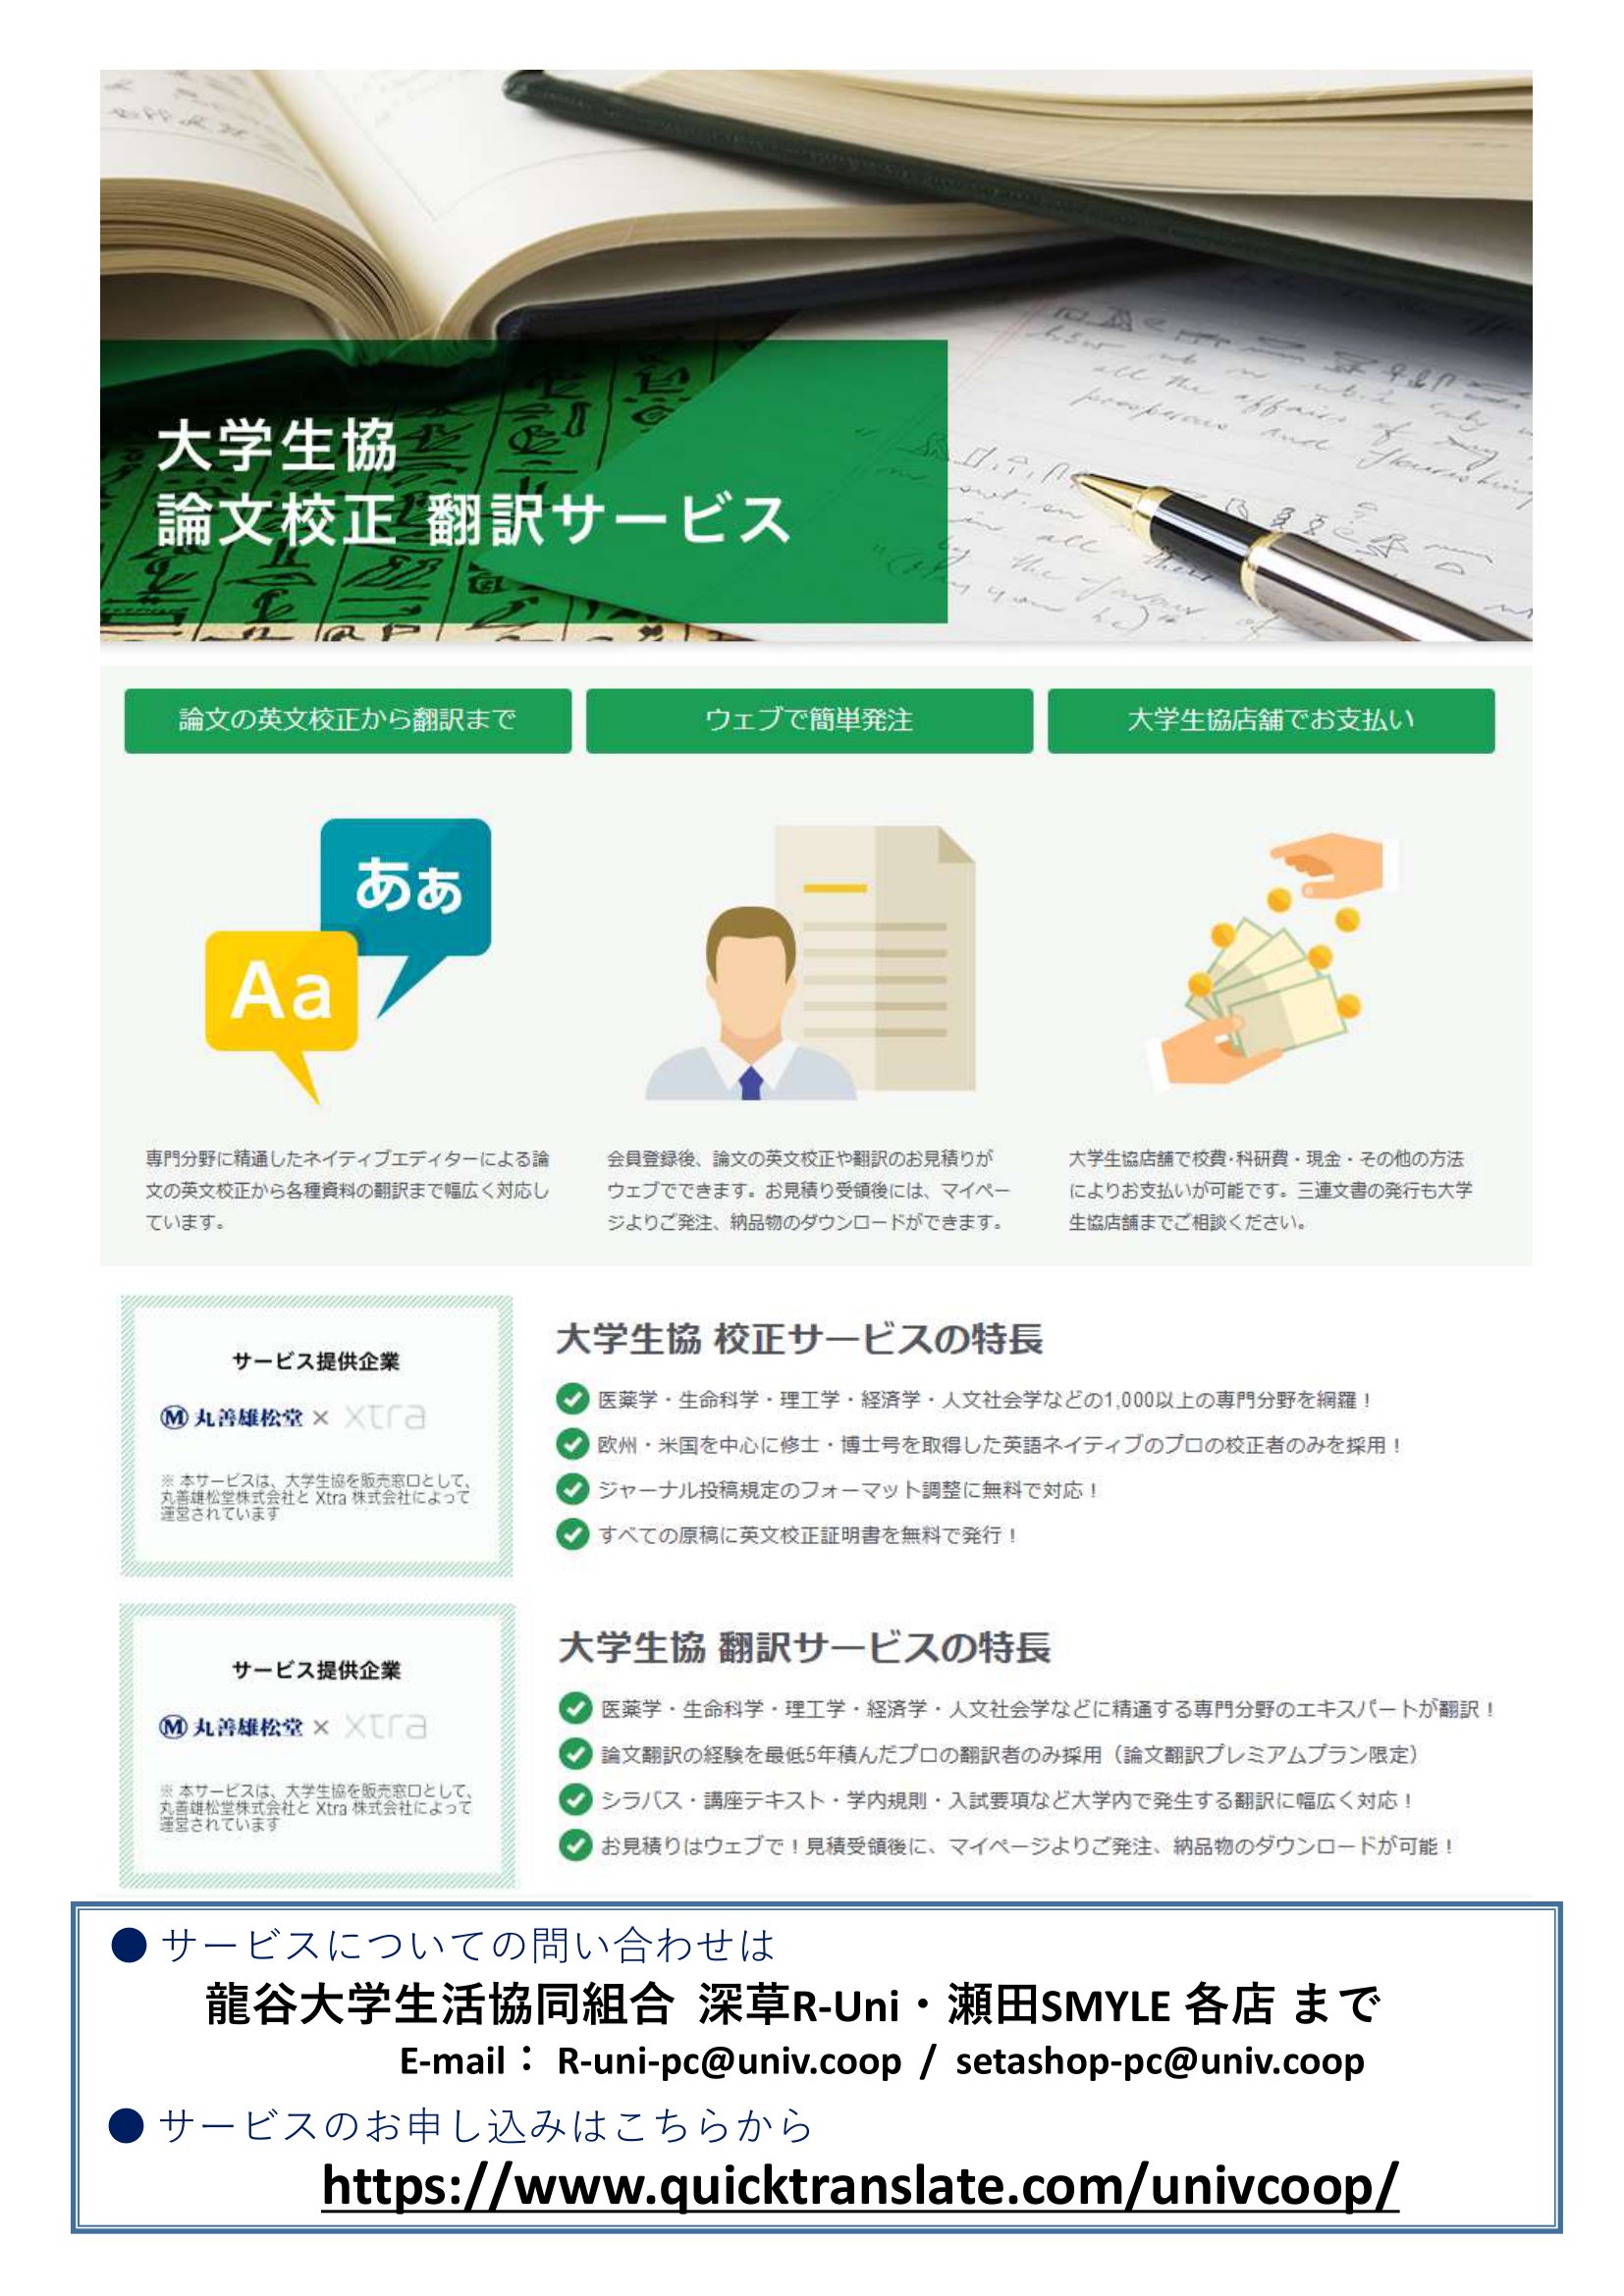 SoftBank 5G